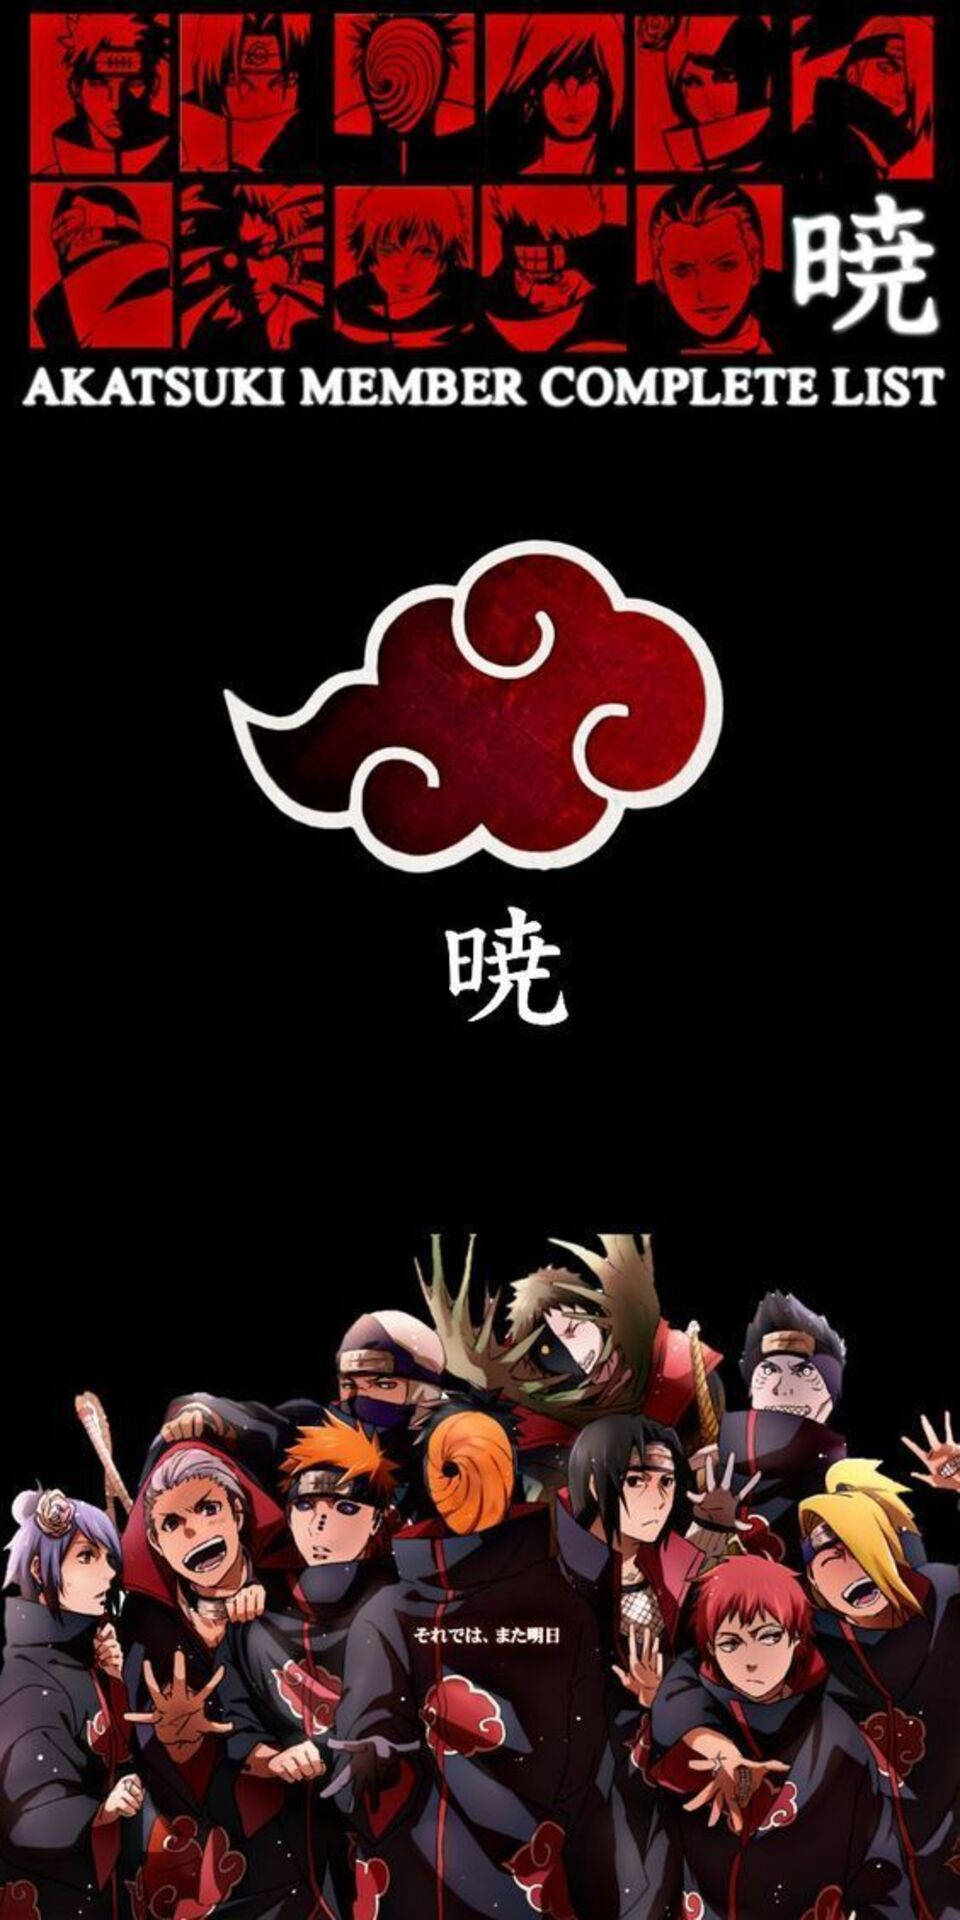 Caption: The Akatsuki Organization From Naruto Series Background